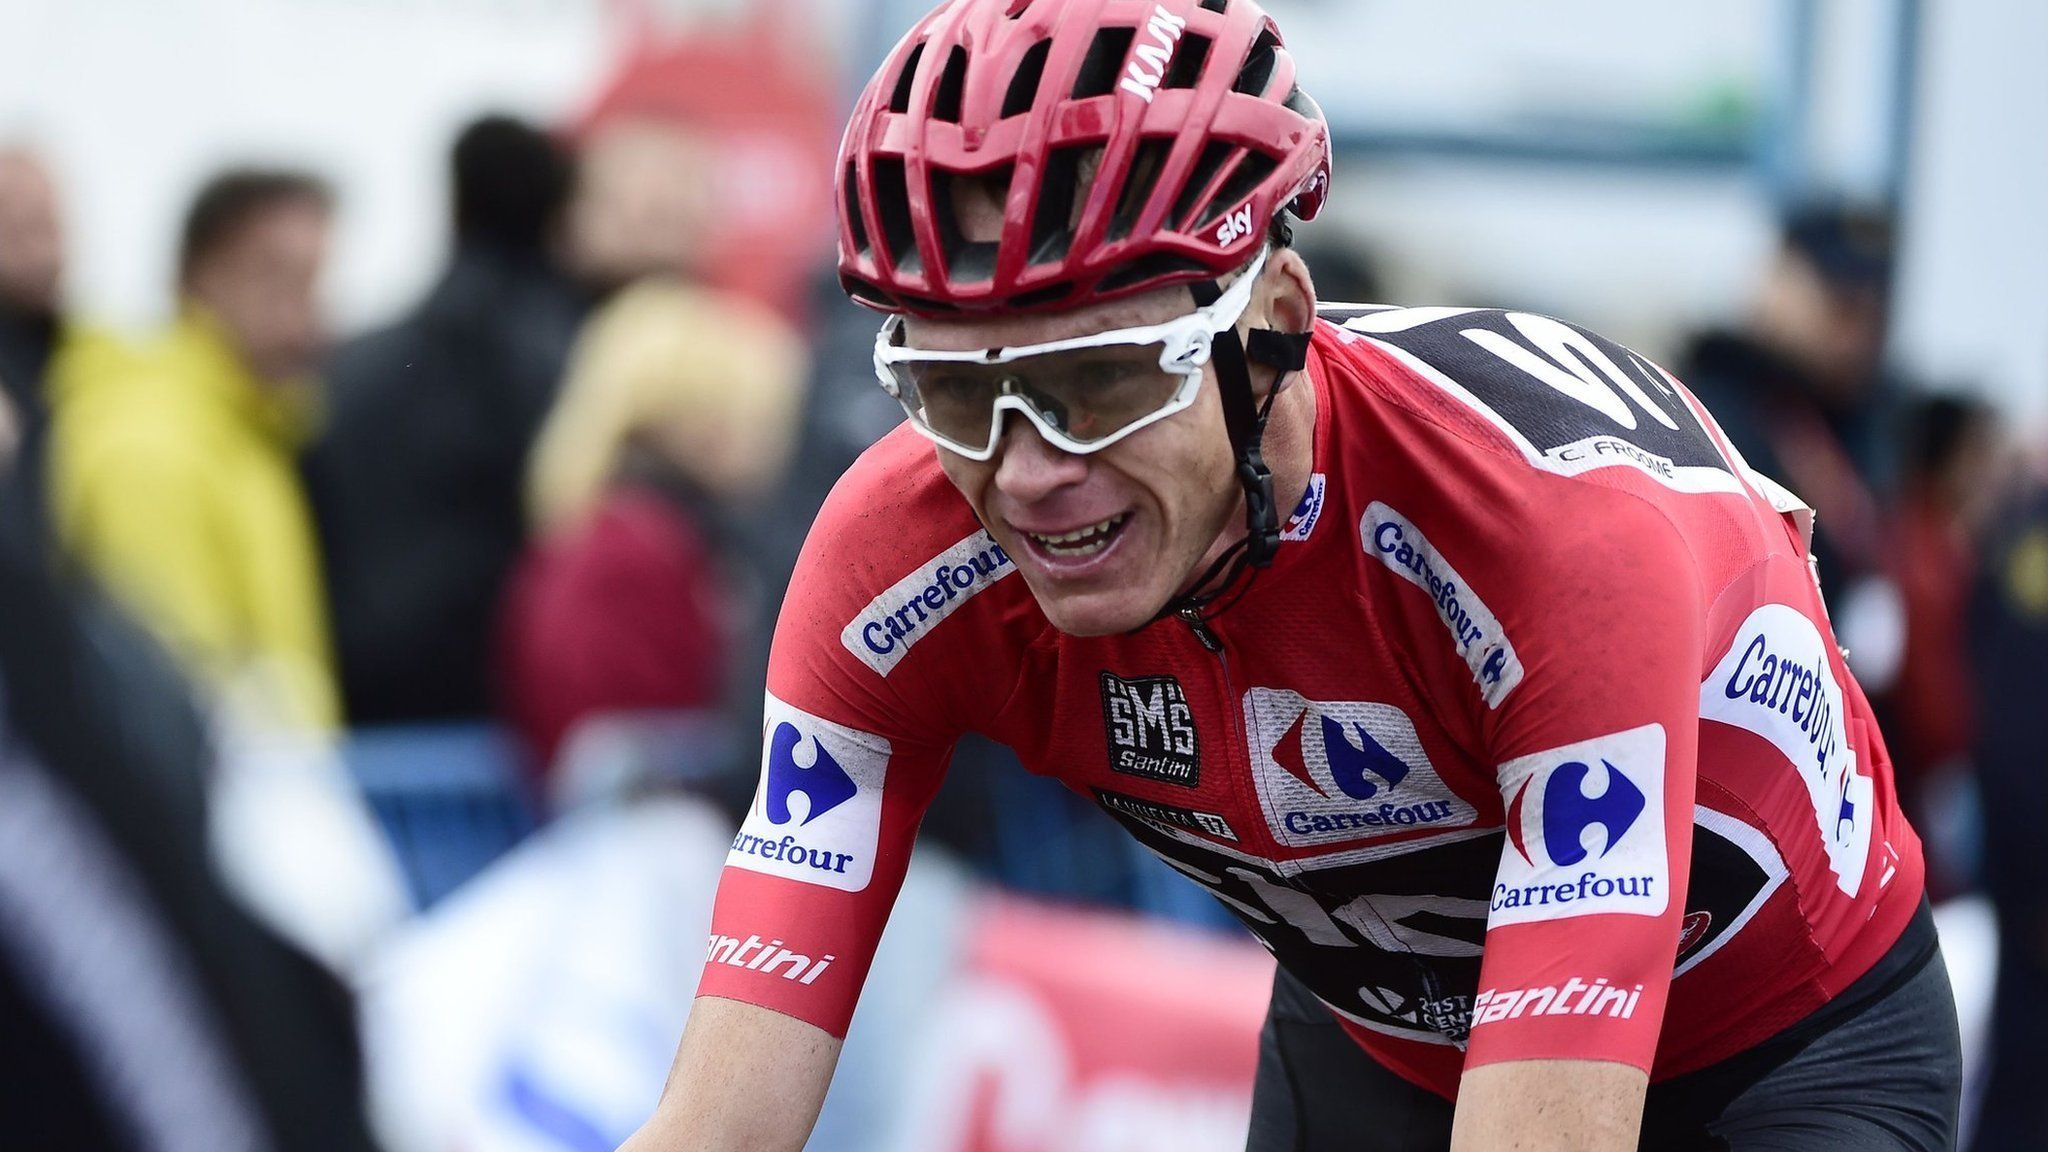 Giro d'Italia: Chris Froome in spotlight at start in Jerusalem - BBC Sport